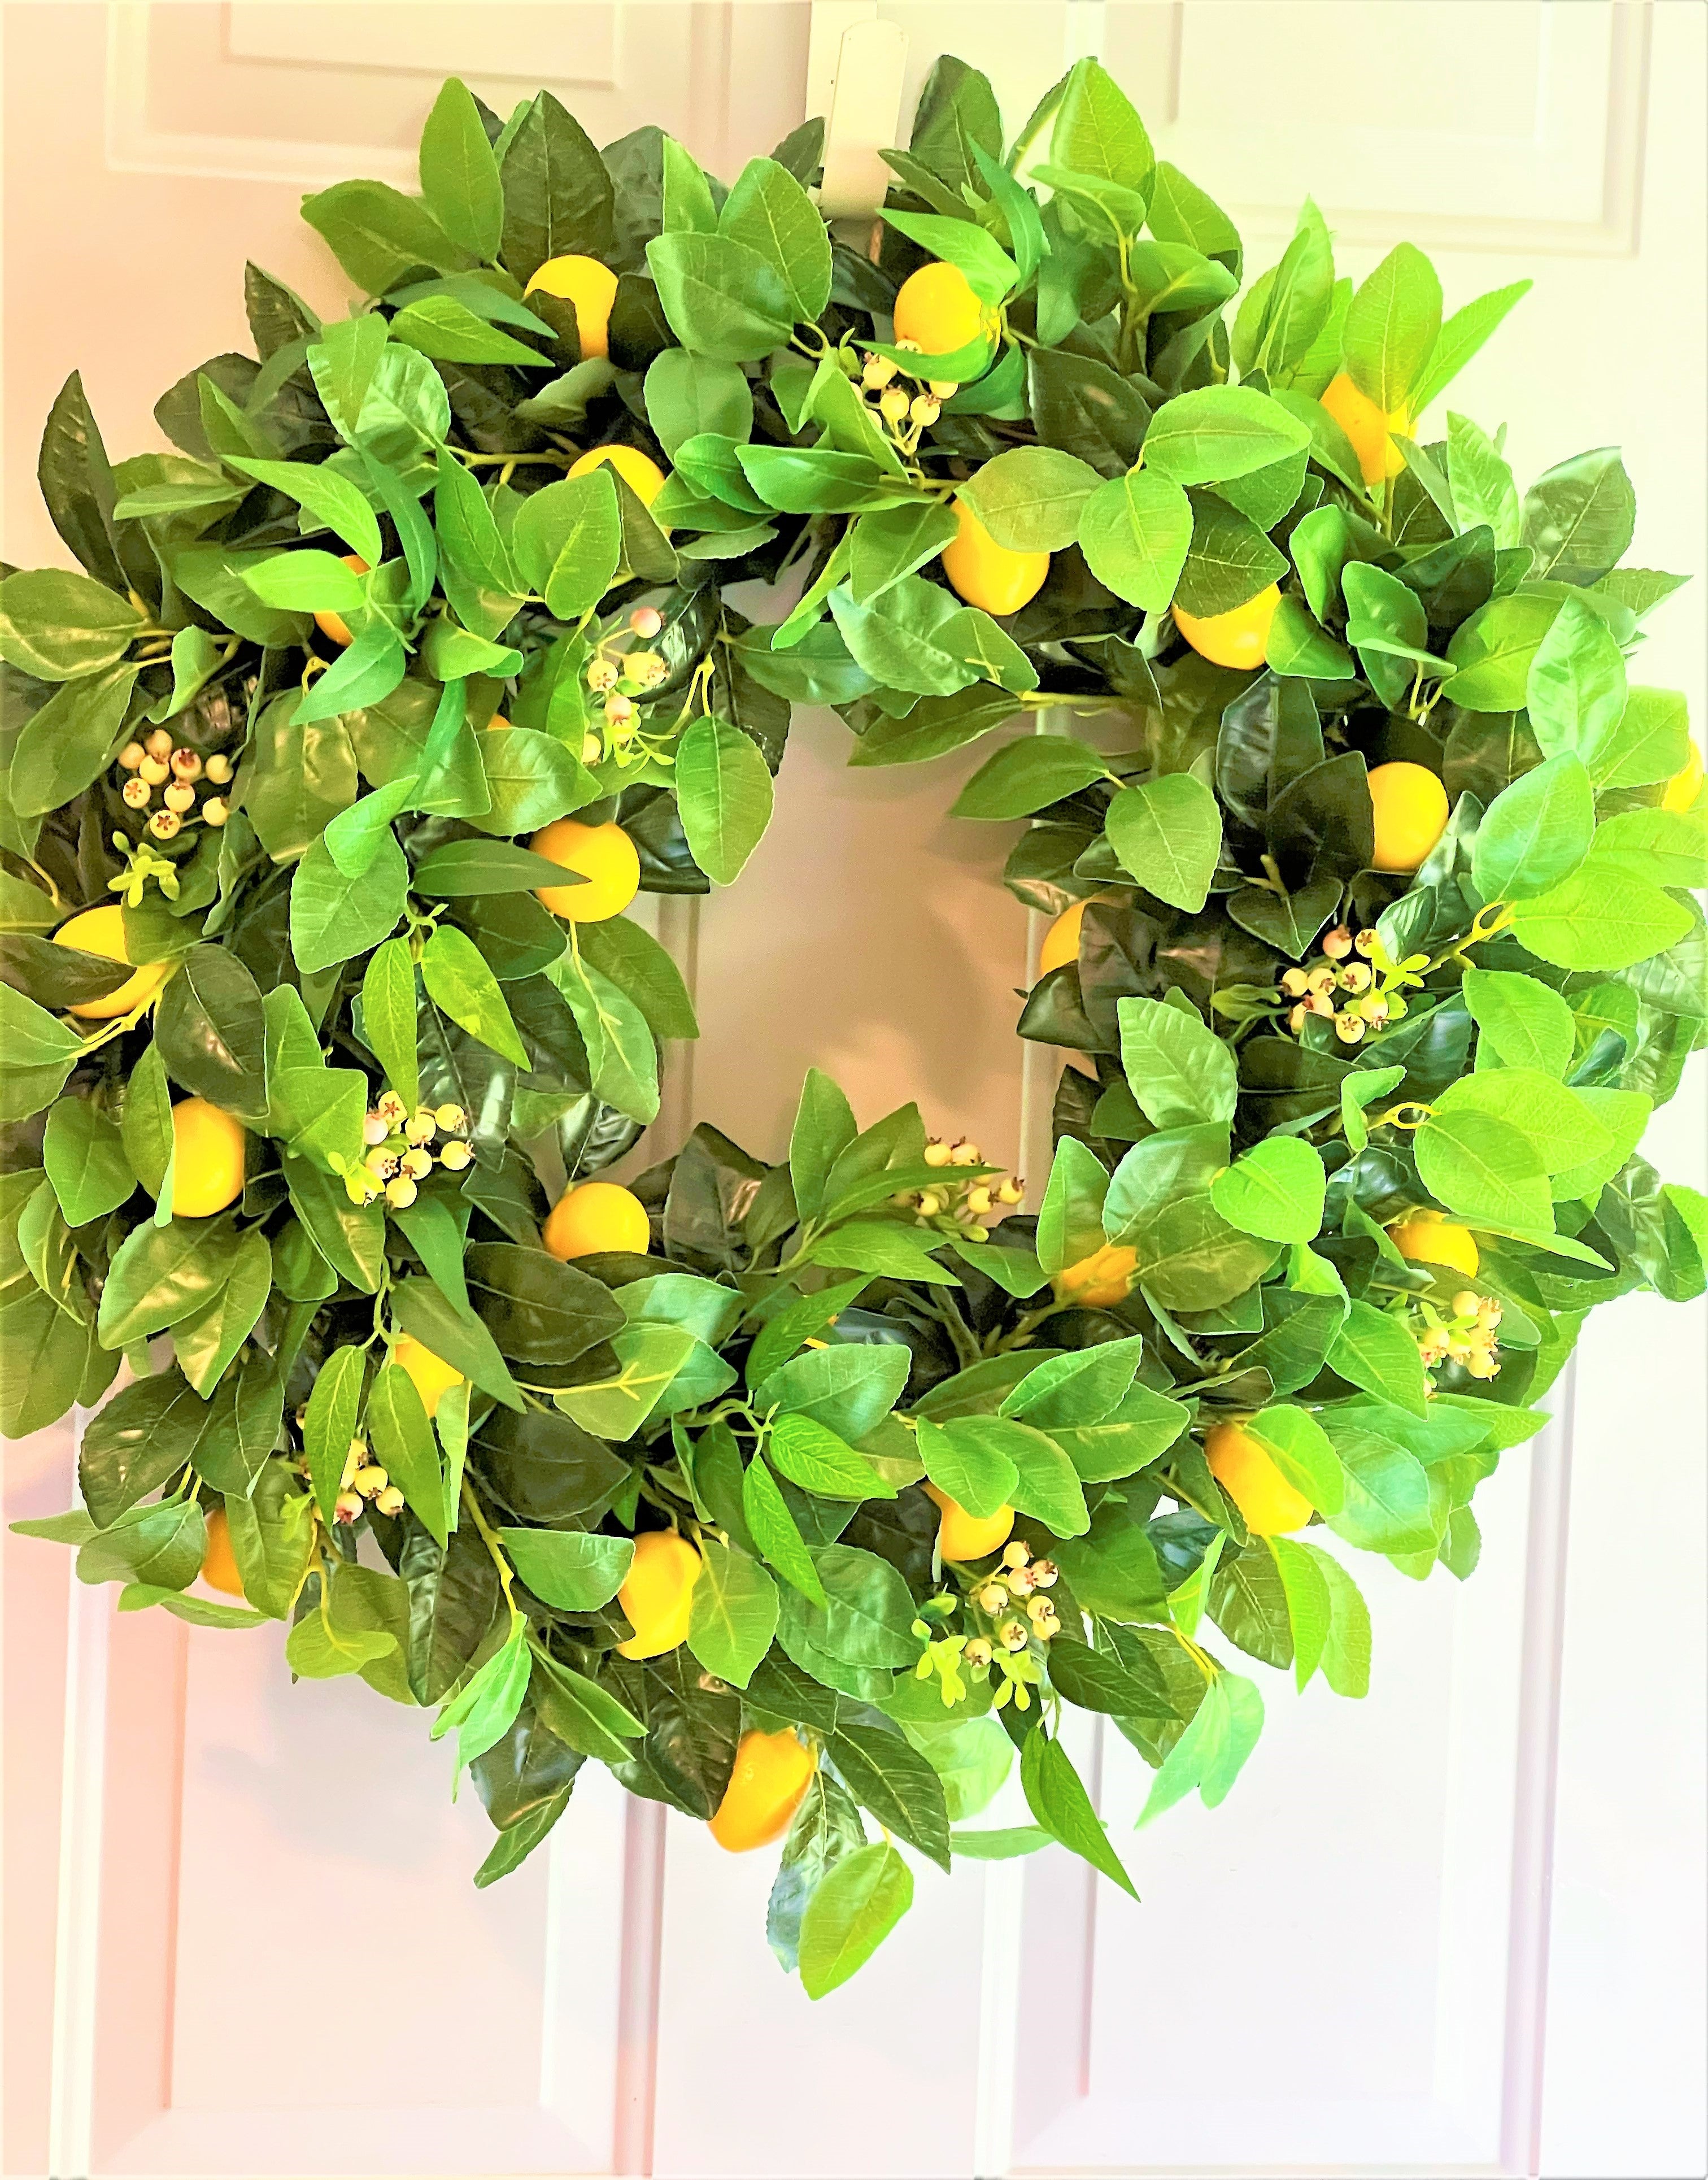 Lemon-Berry Wreath, Spring- Summer Wreath, Seasonal Wreath 26" Diameter